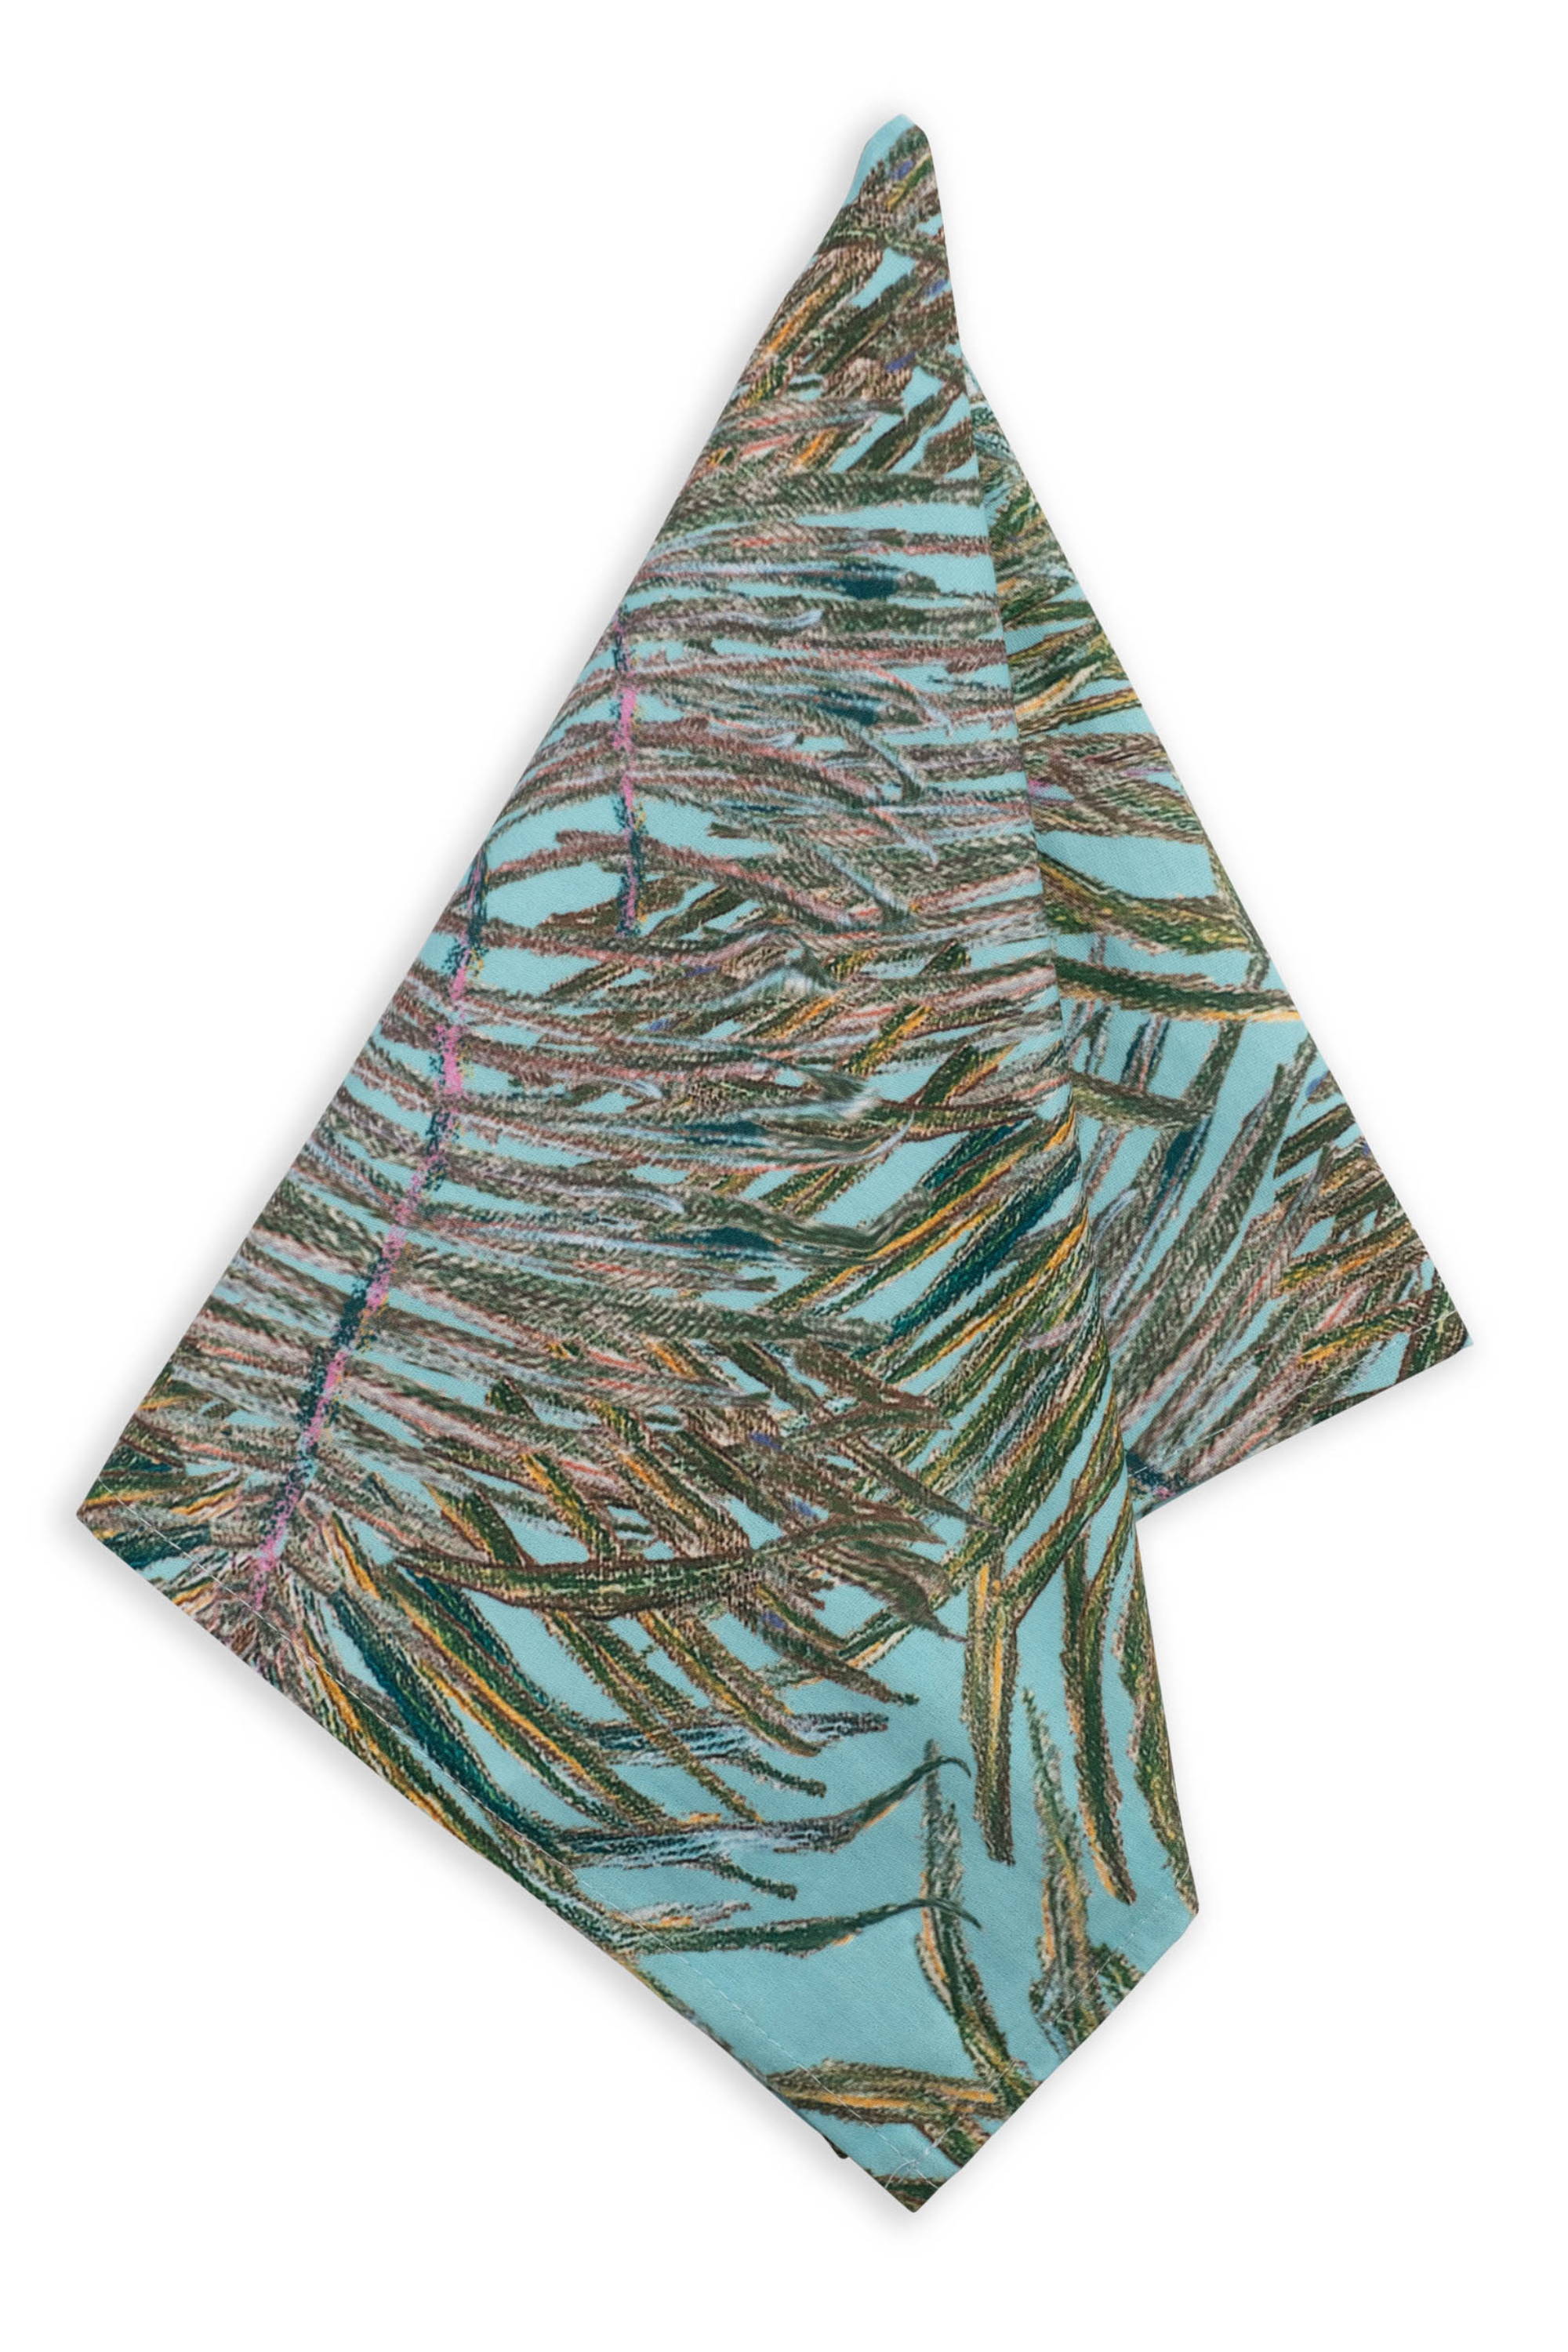 Green palm leaf printed cotton table cloth by Ala von Auersperg